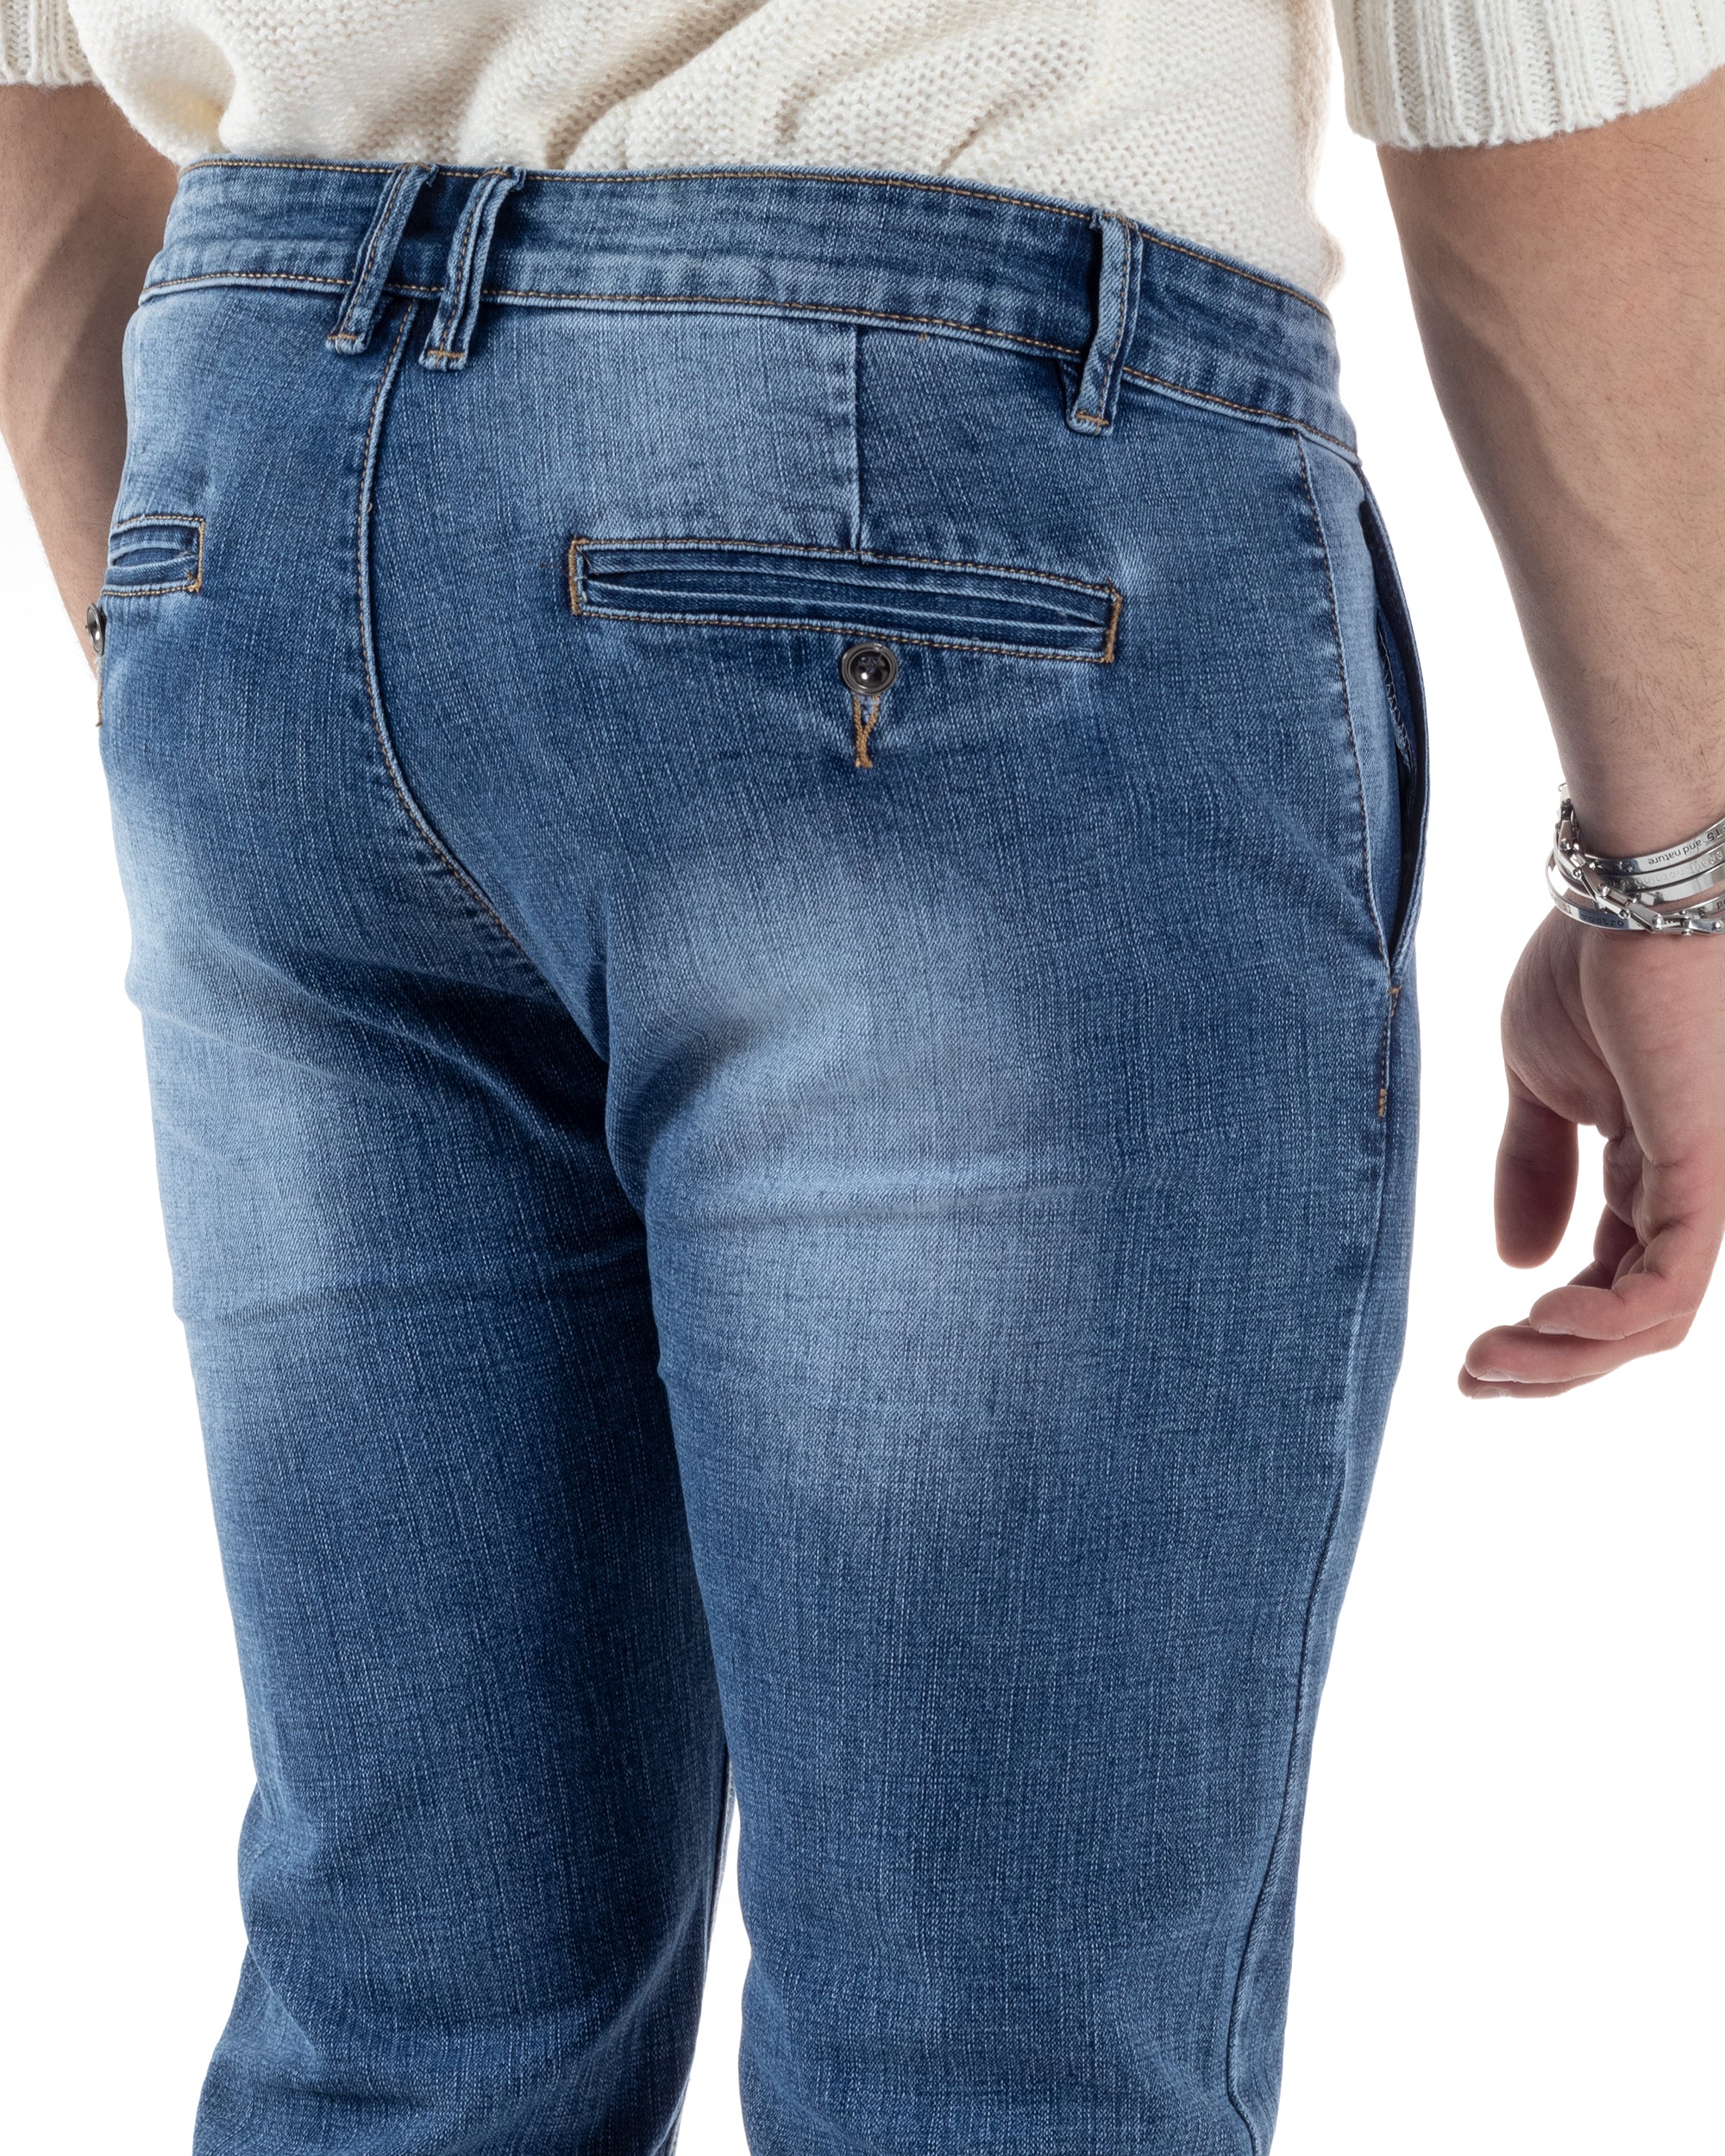 Pantaloni Uomo Jeans Tasca America Slim Fit Blu Denim Stone Washed GIOSAL-JS1009A